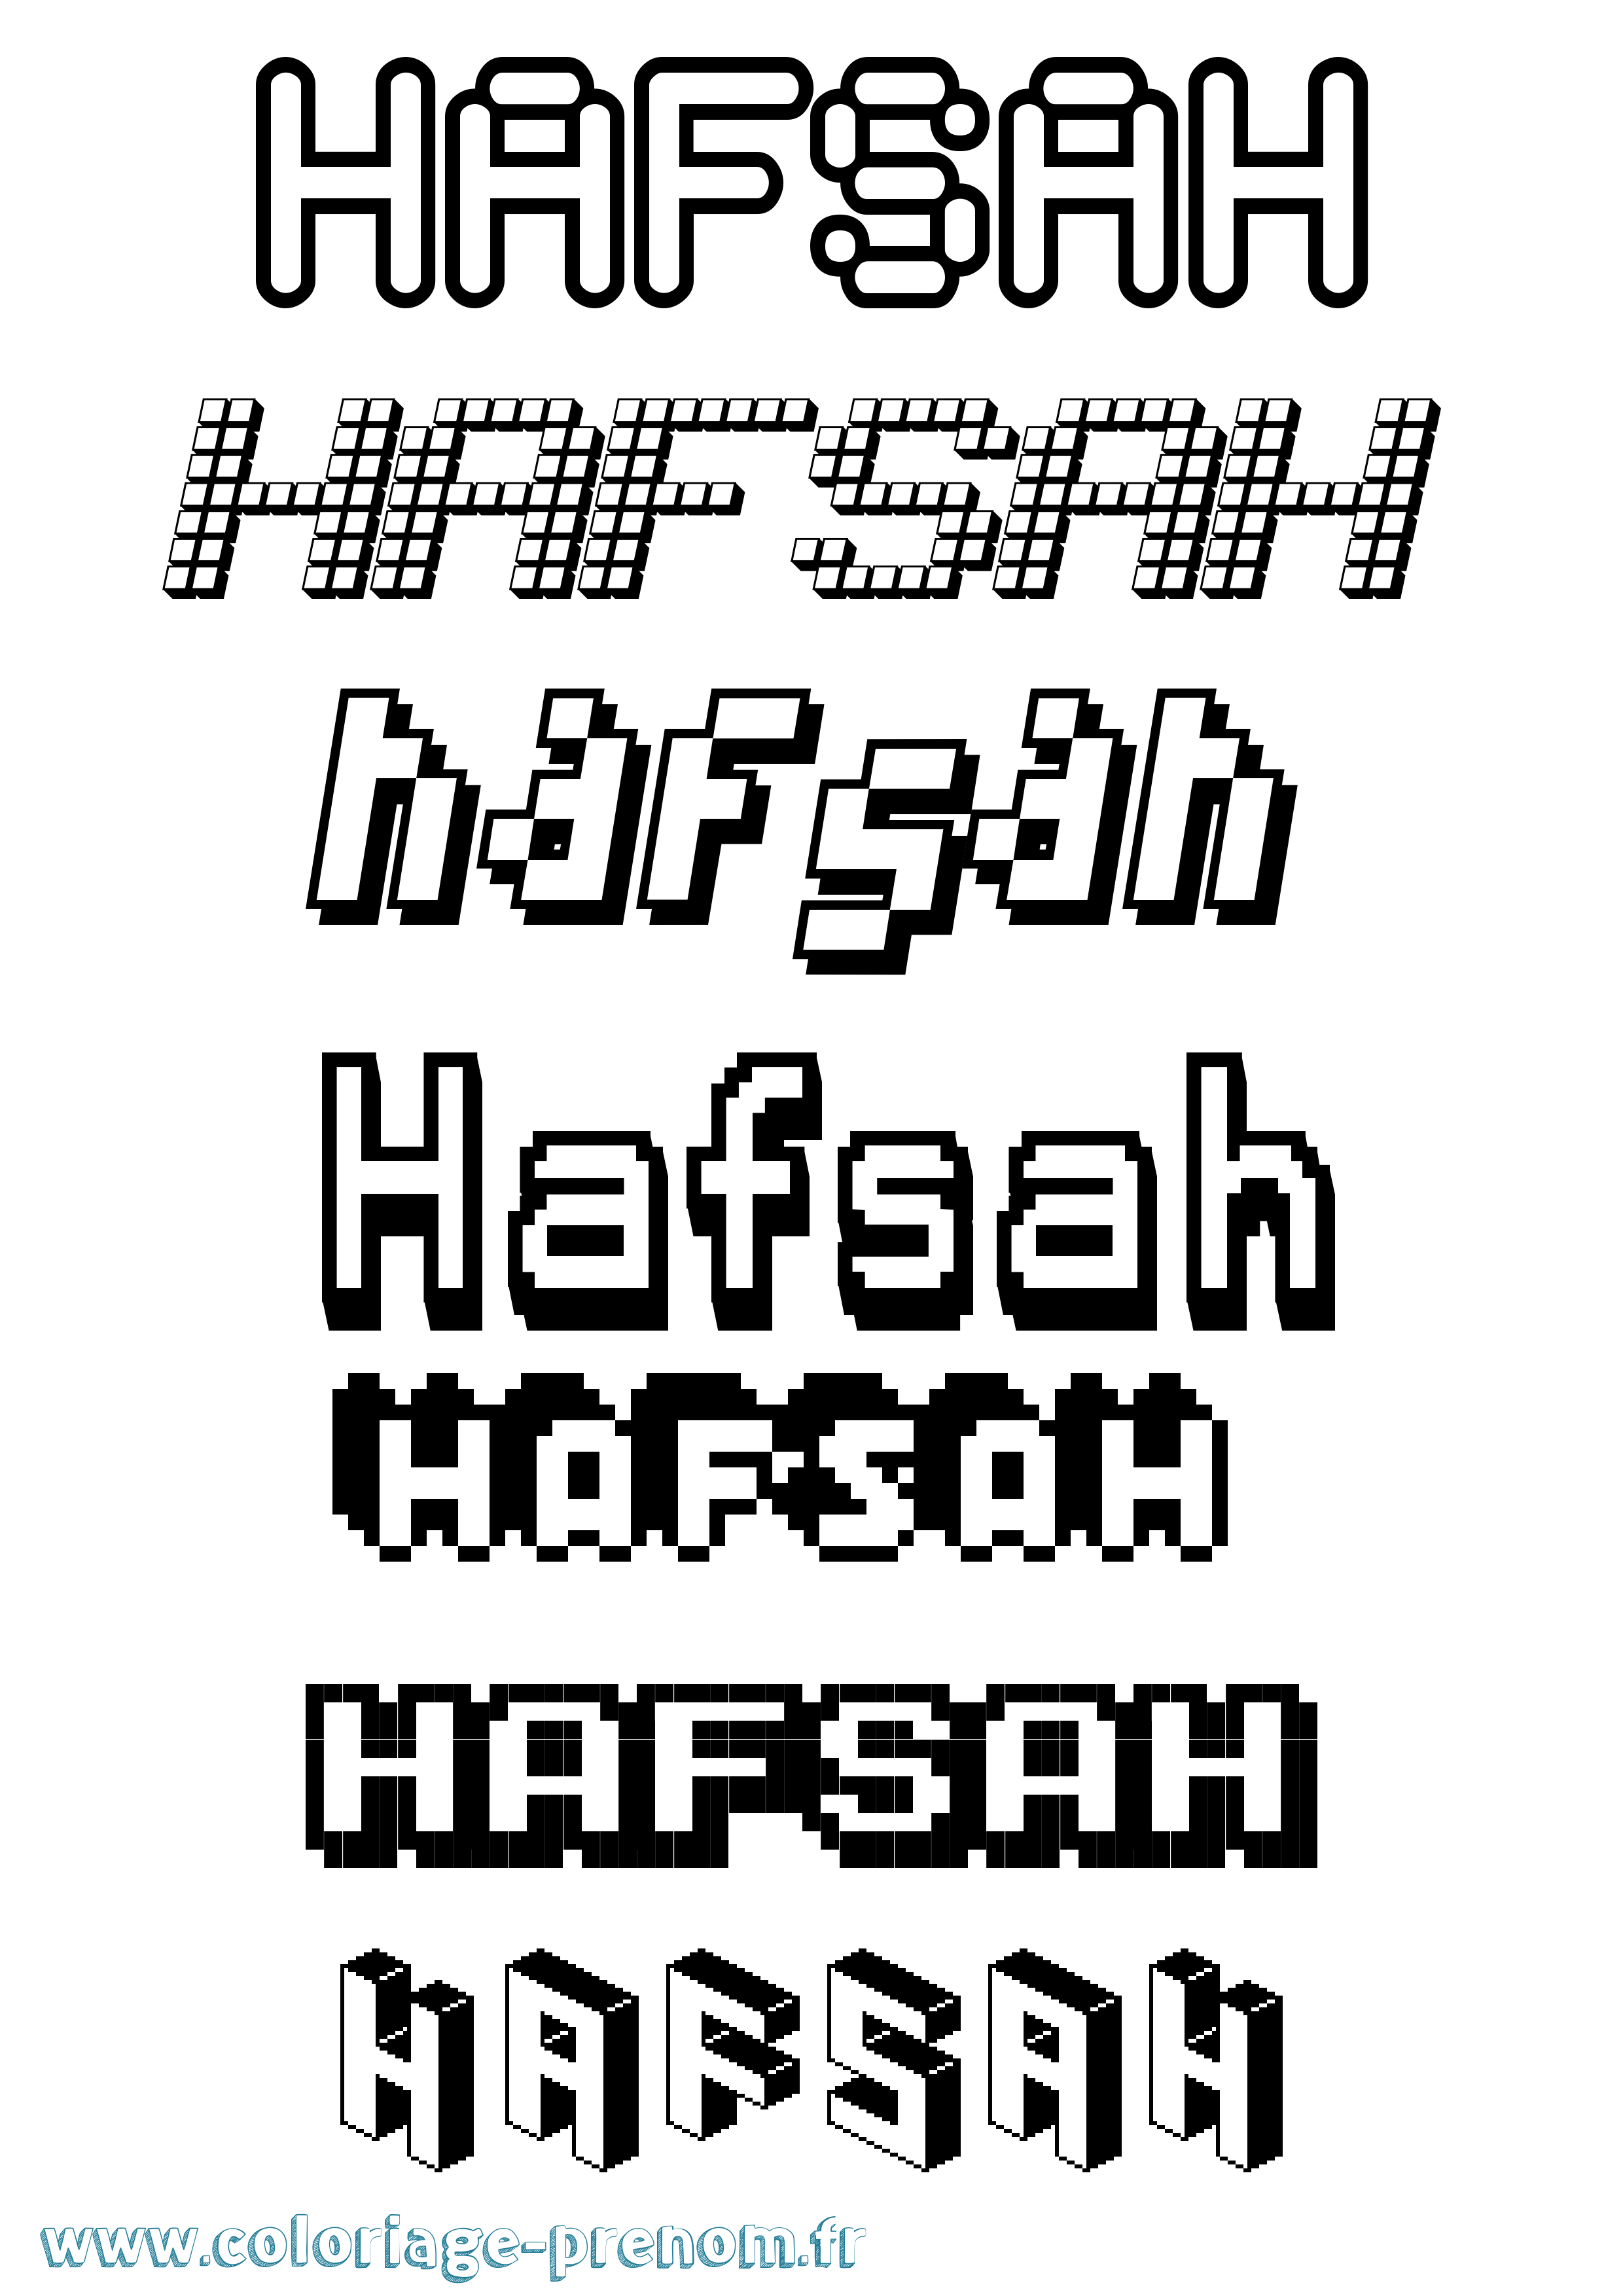 Coloriage prénom Hafsah Pixel